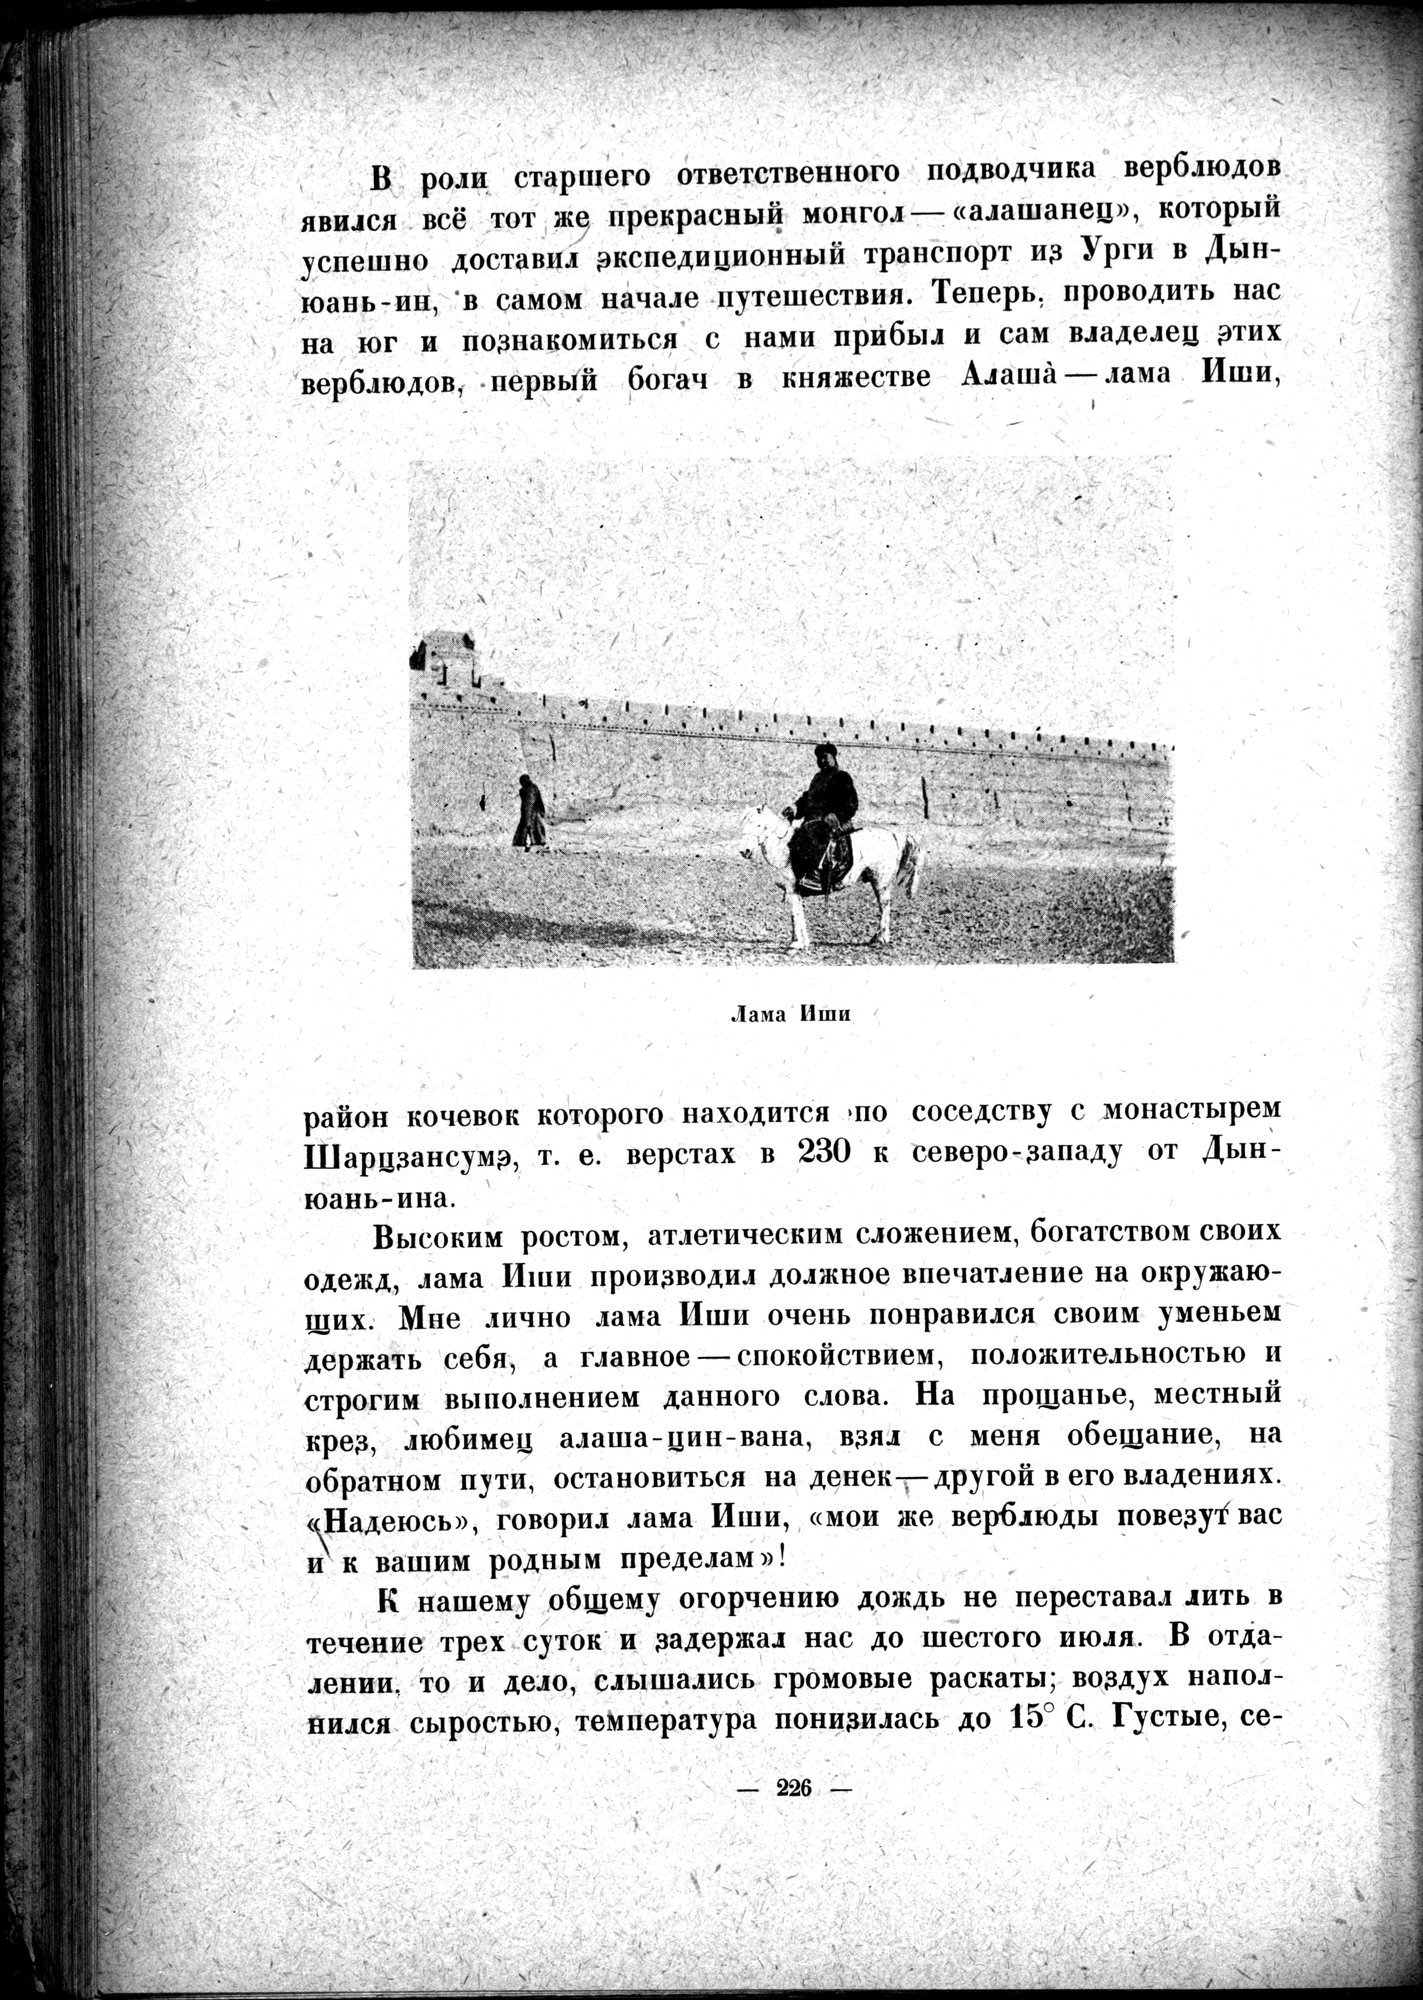 Mongoliya i Amdo i mertby gorod Khara-Khoto : vol.1 / Page 272 (Grayscale High Resolution Image)